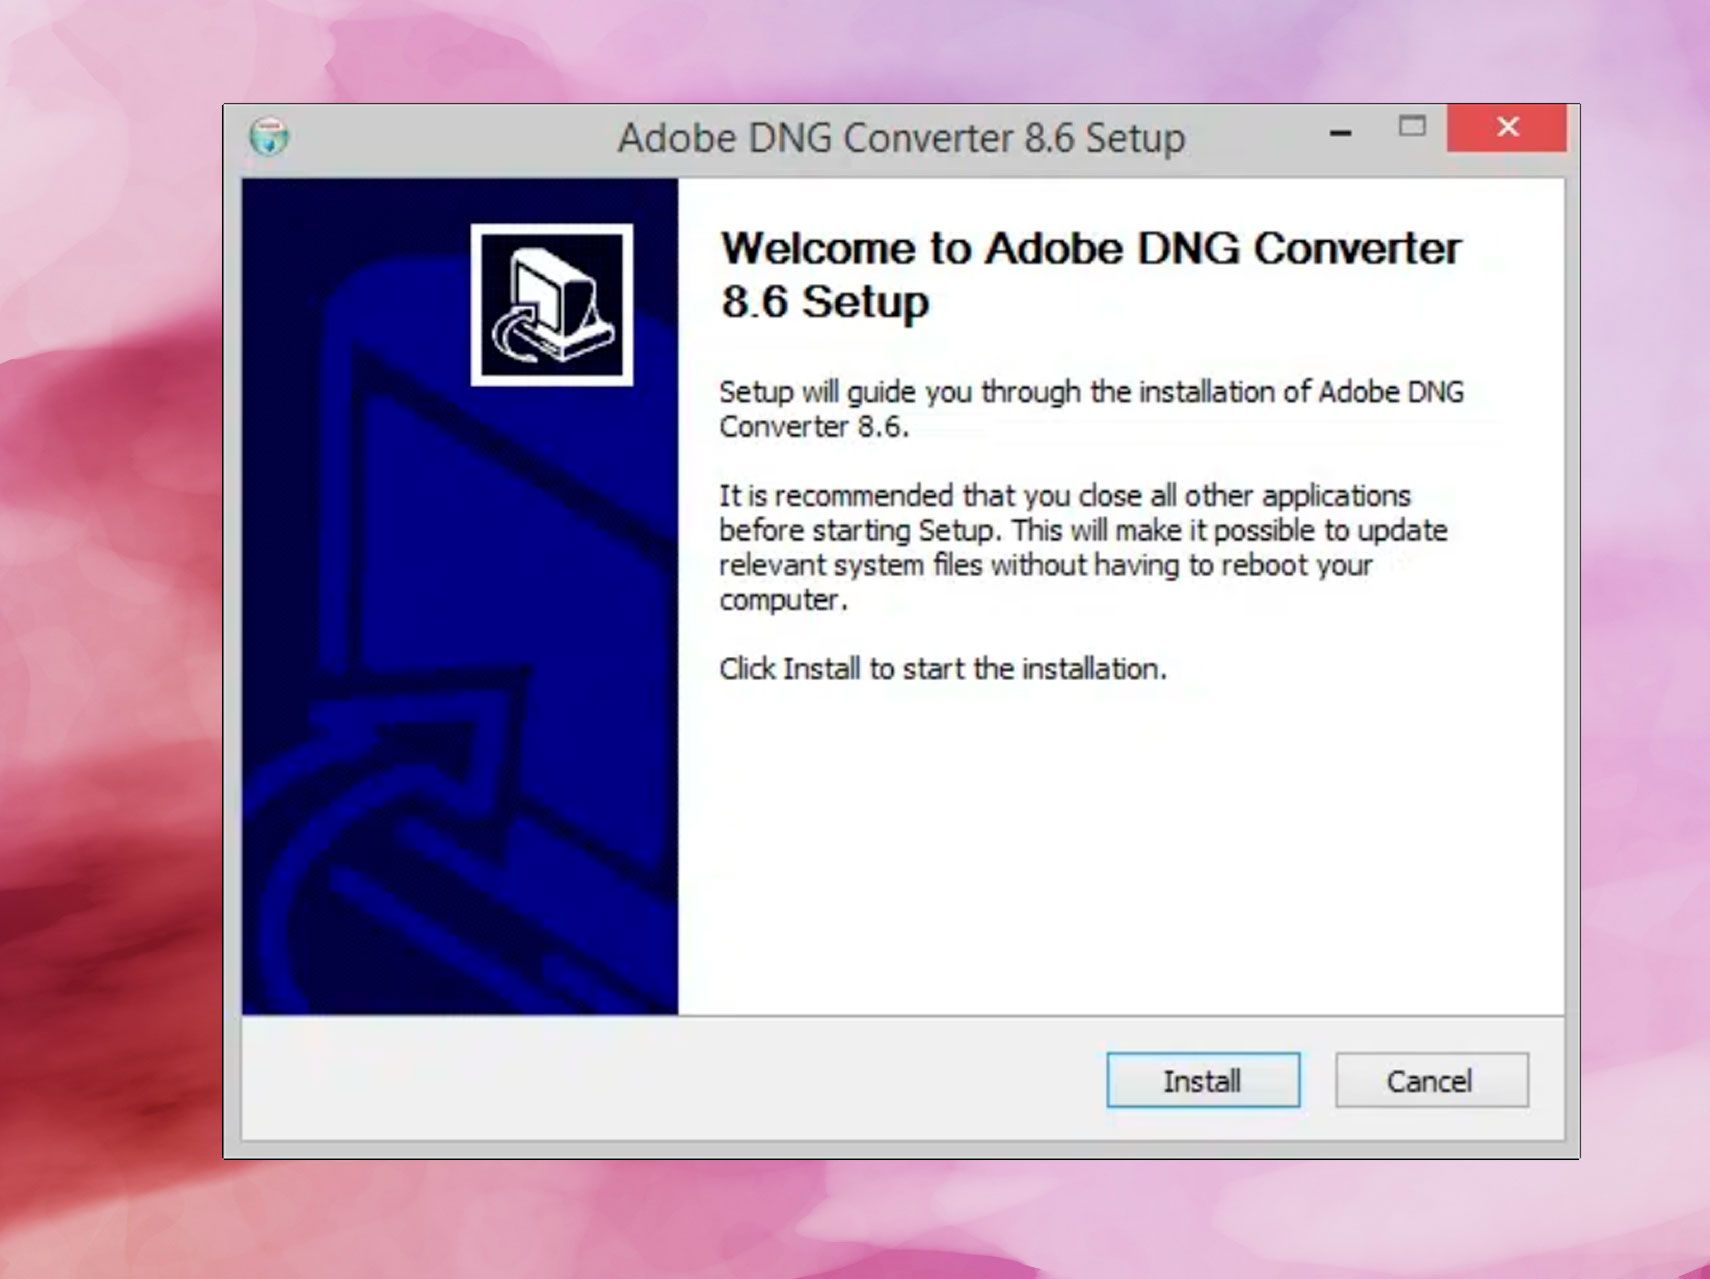 Nainstalovat Adobe DNG Converter..